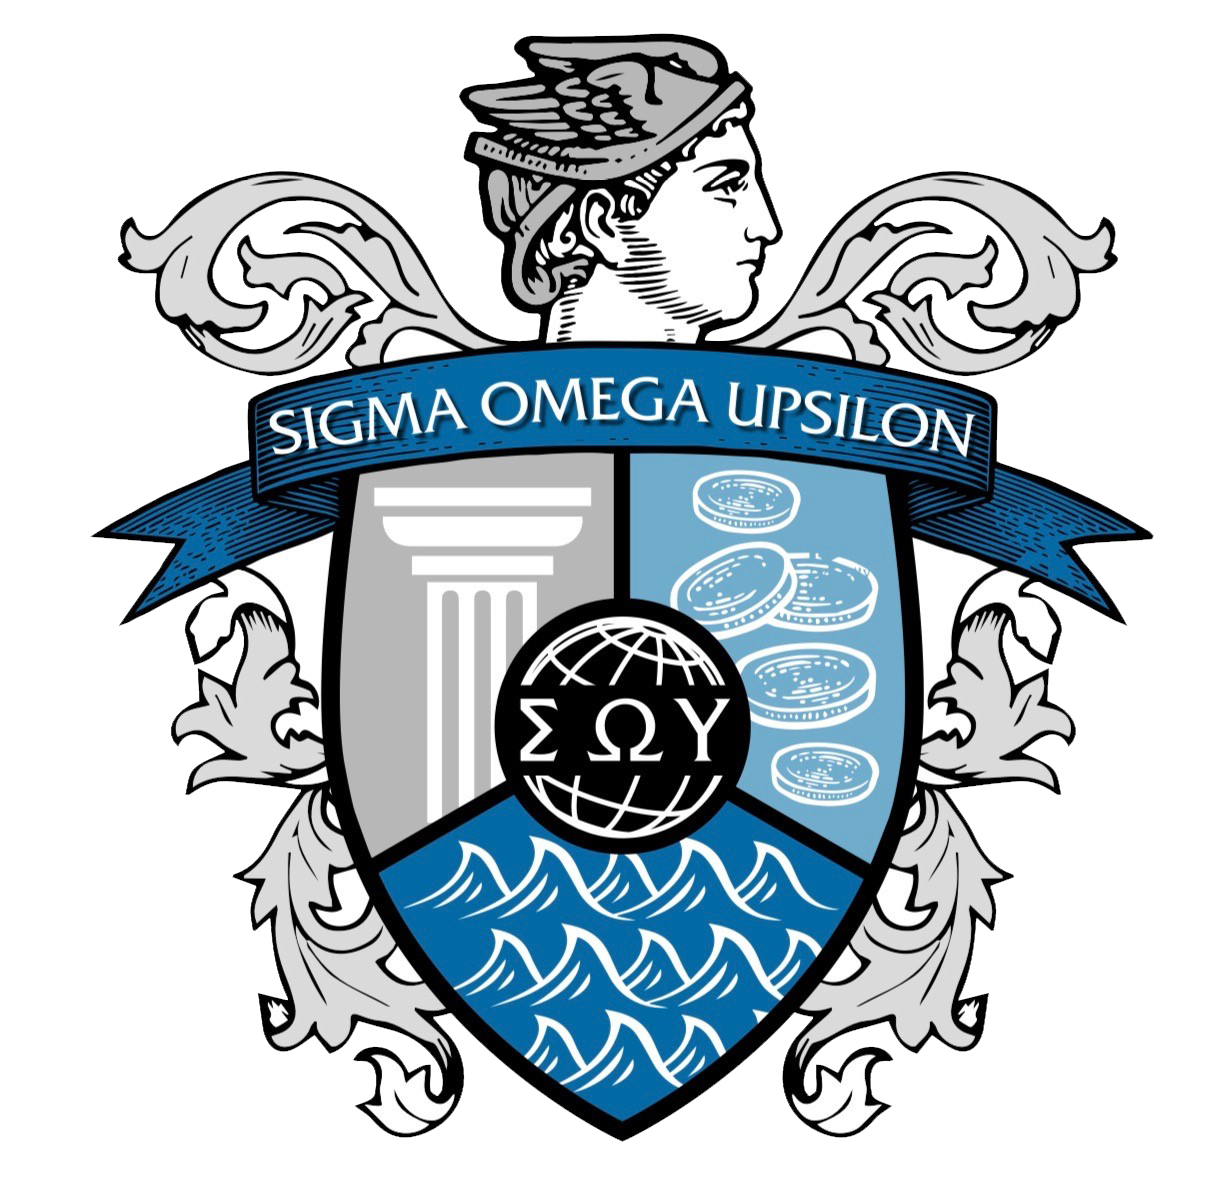 Sigma Omega Upsilon International Business Fraternity